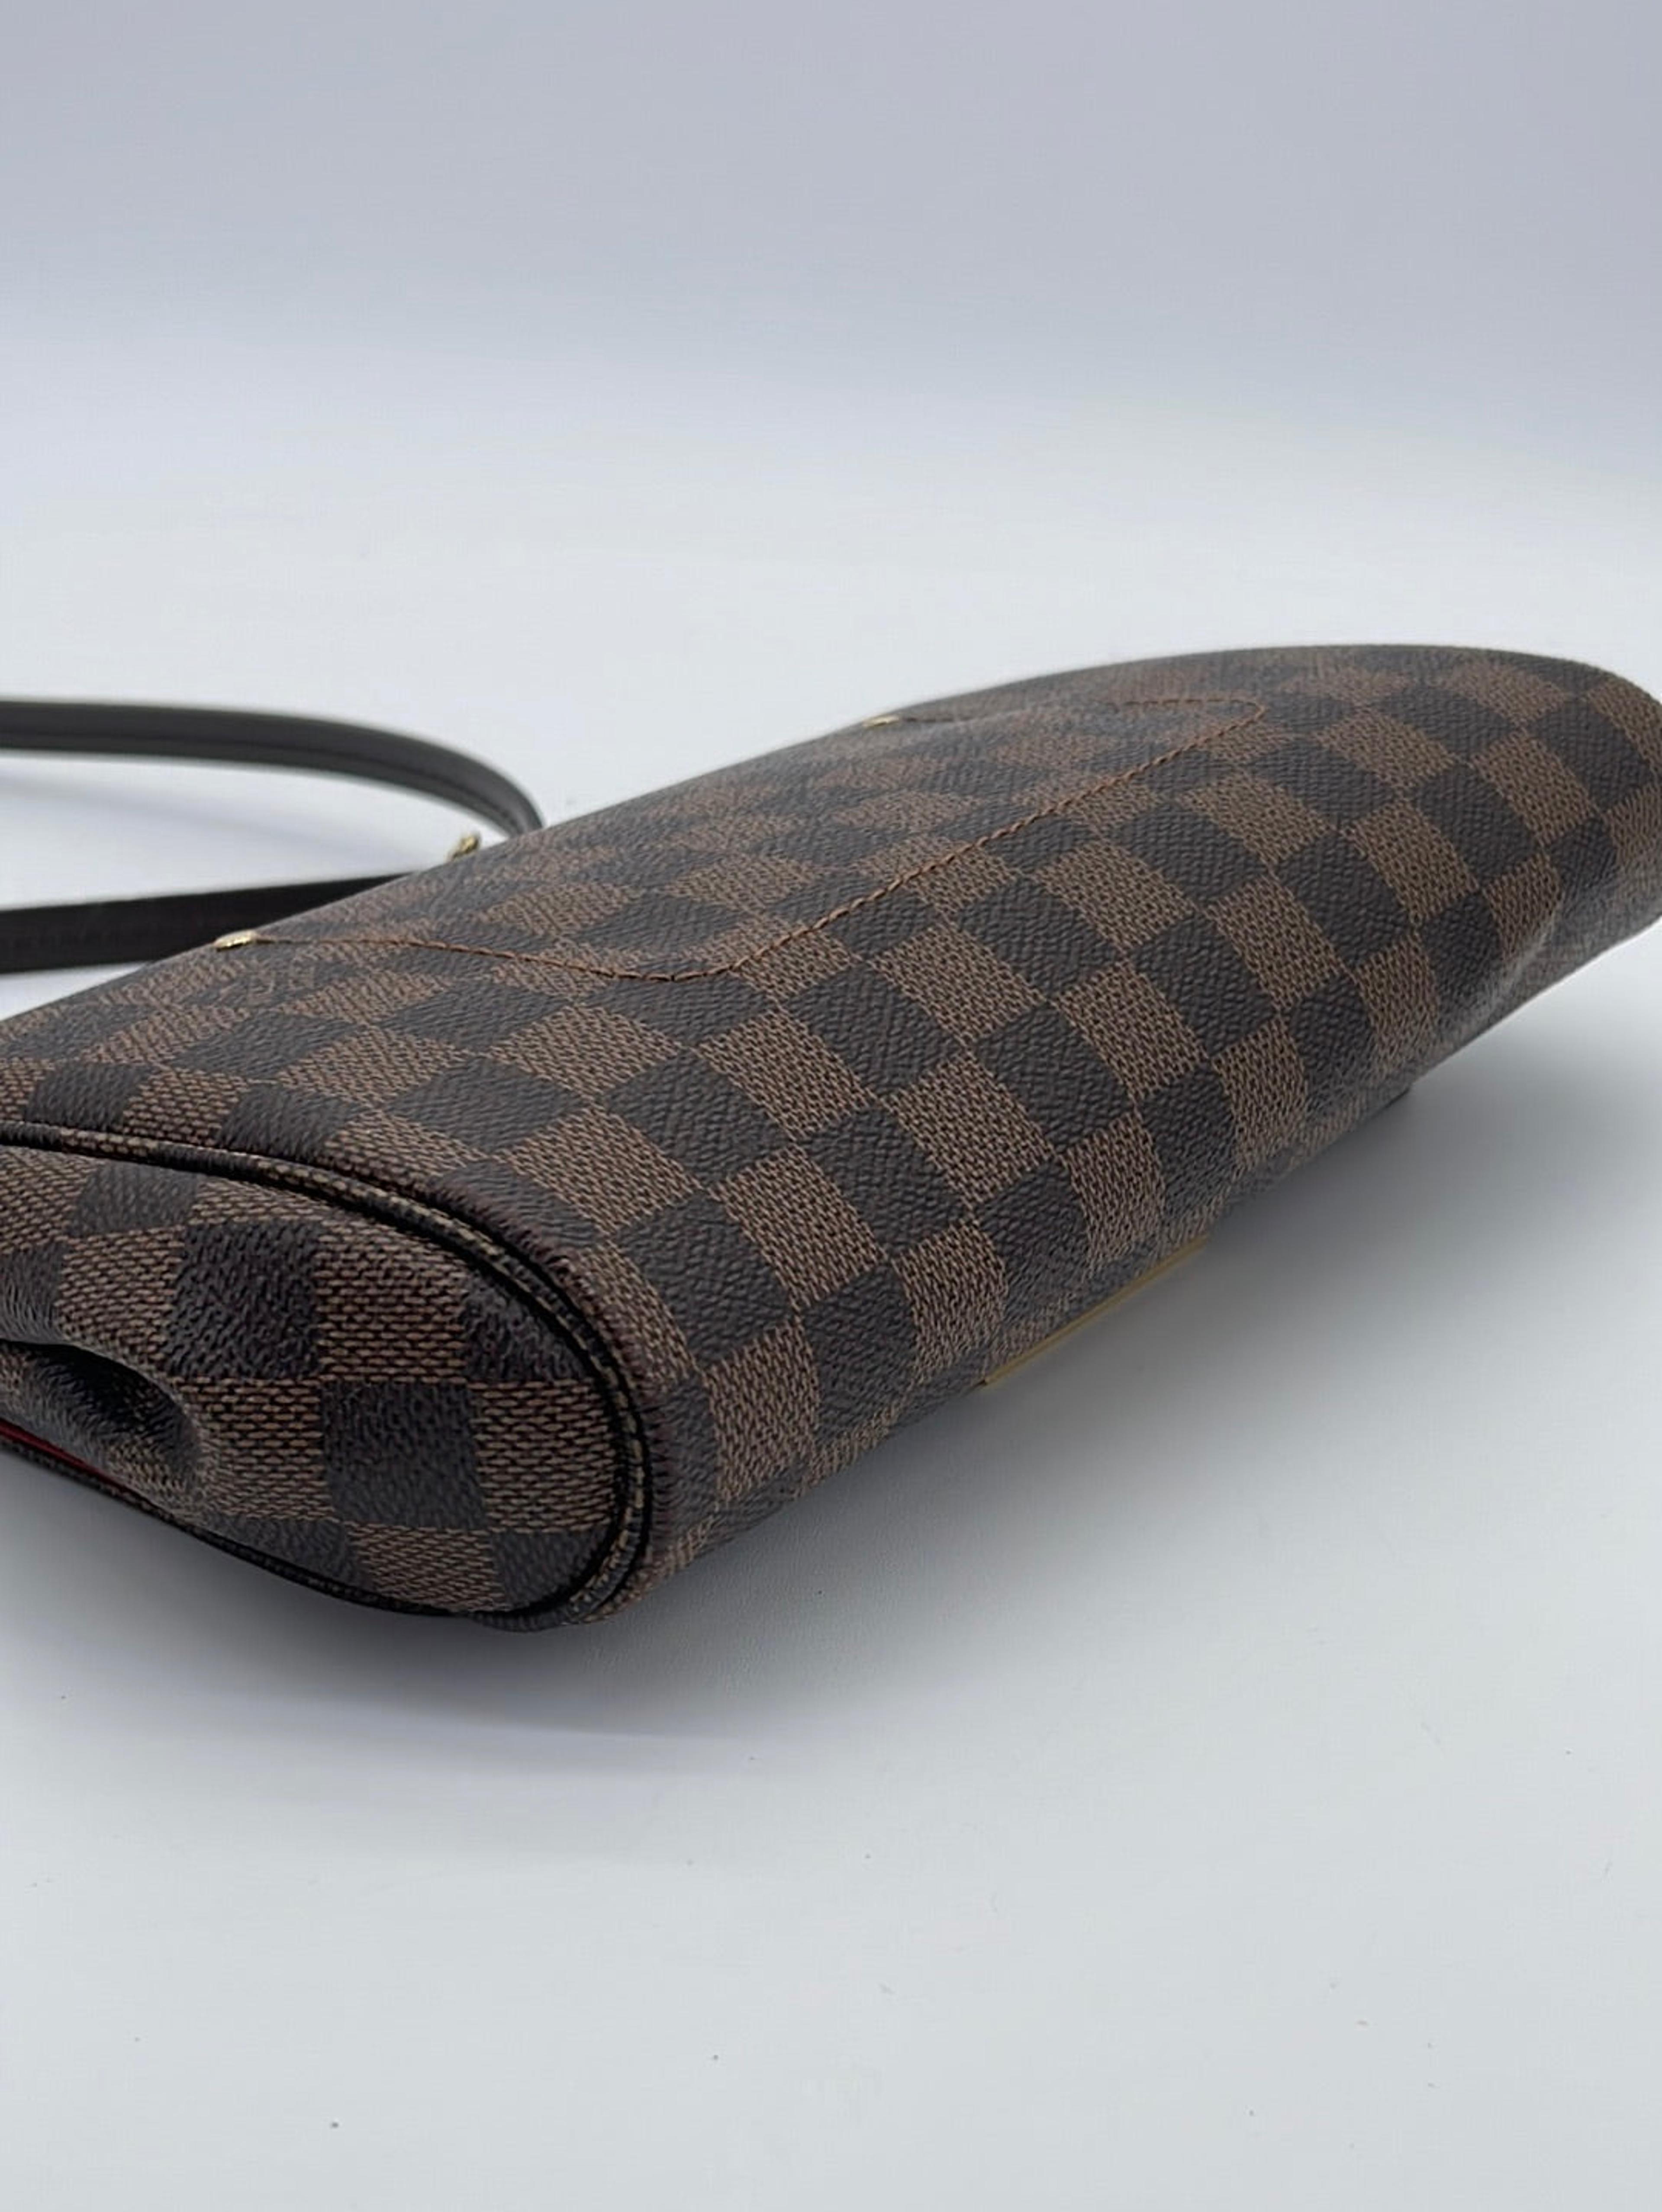 PRELOVED Louis Vuitton Discontinued Monogram Favorite PM Bag NO